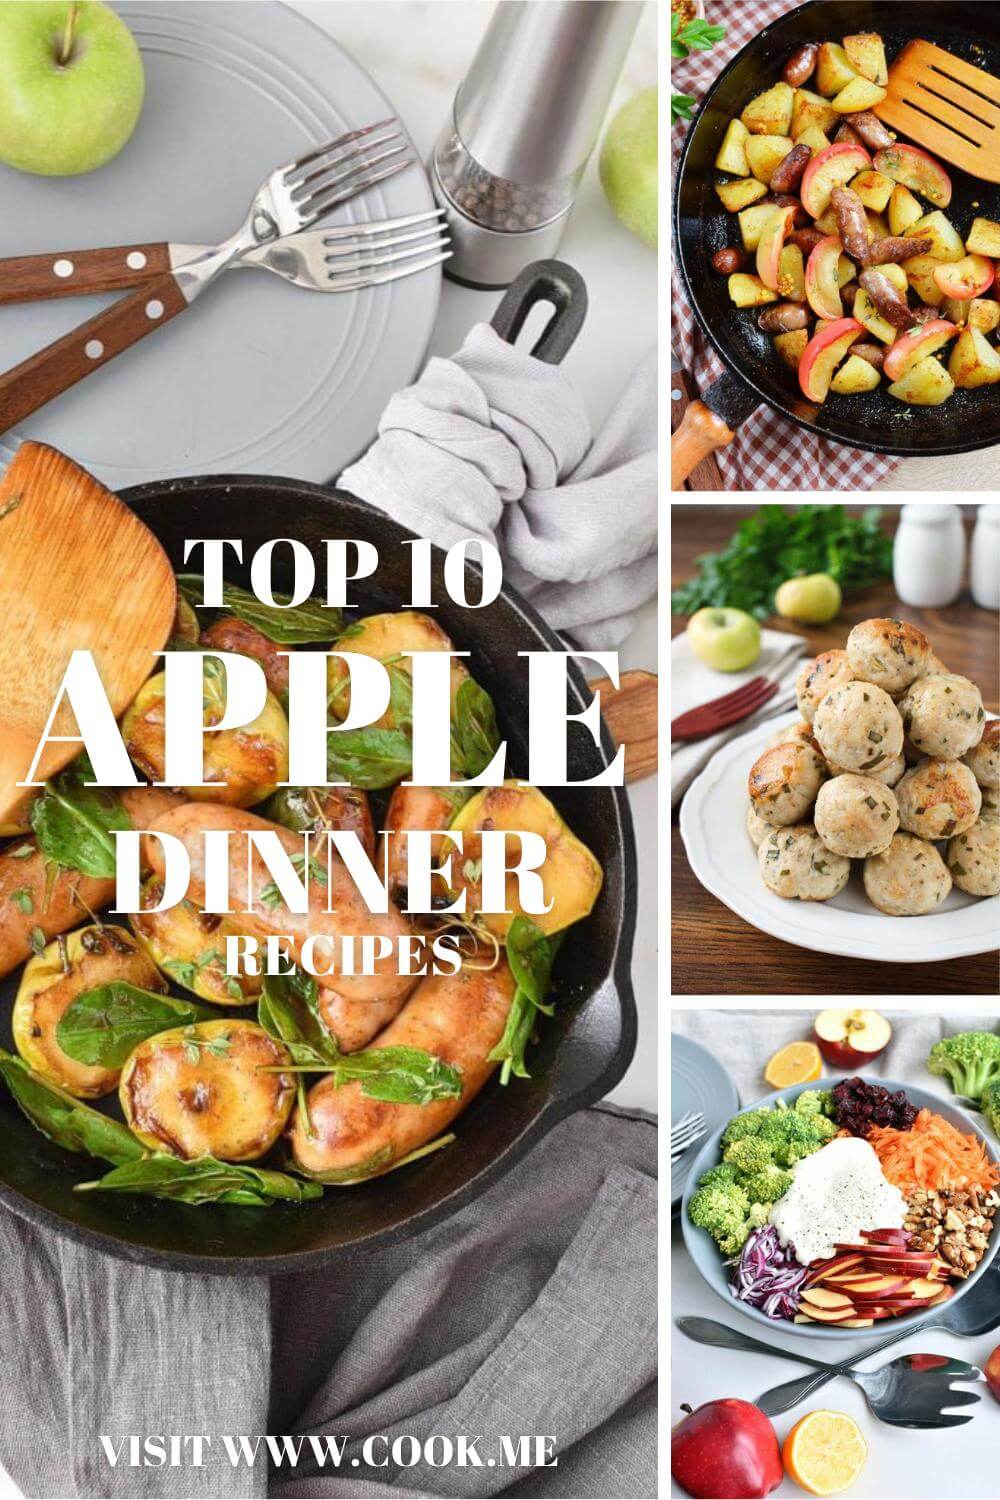 Top 10 Apple Dinner Recipes - Cook.me Recipes